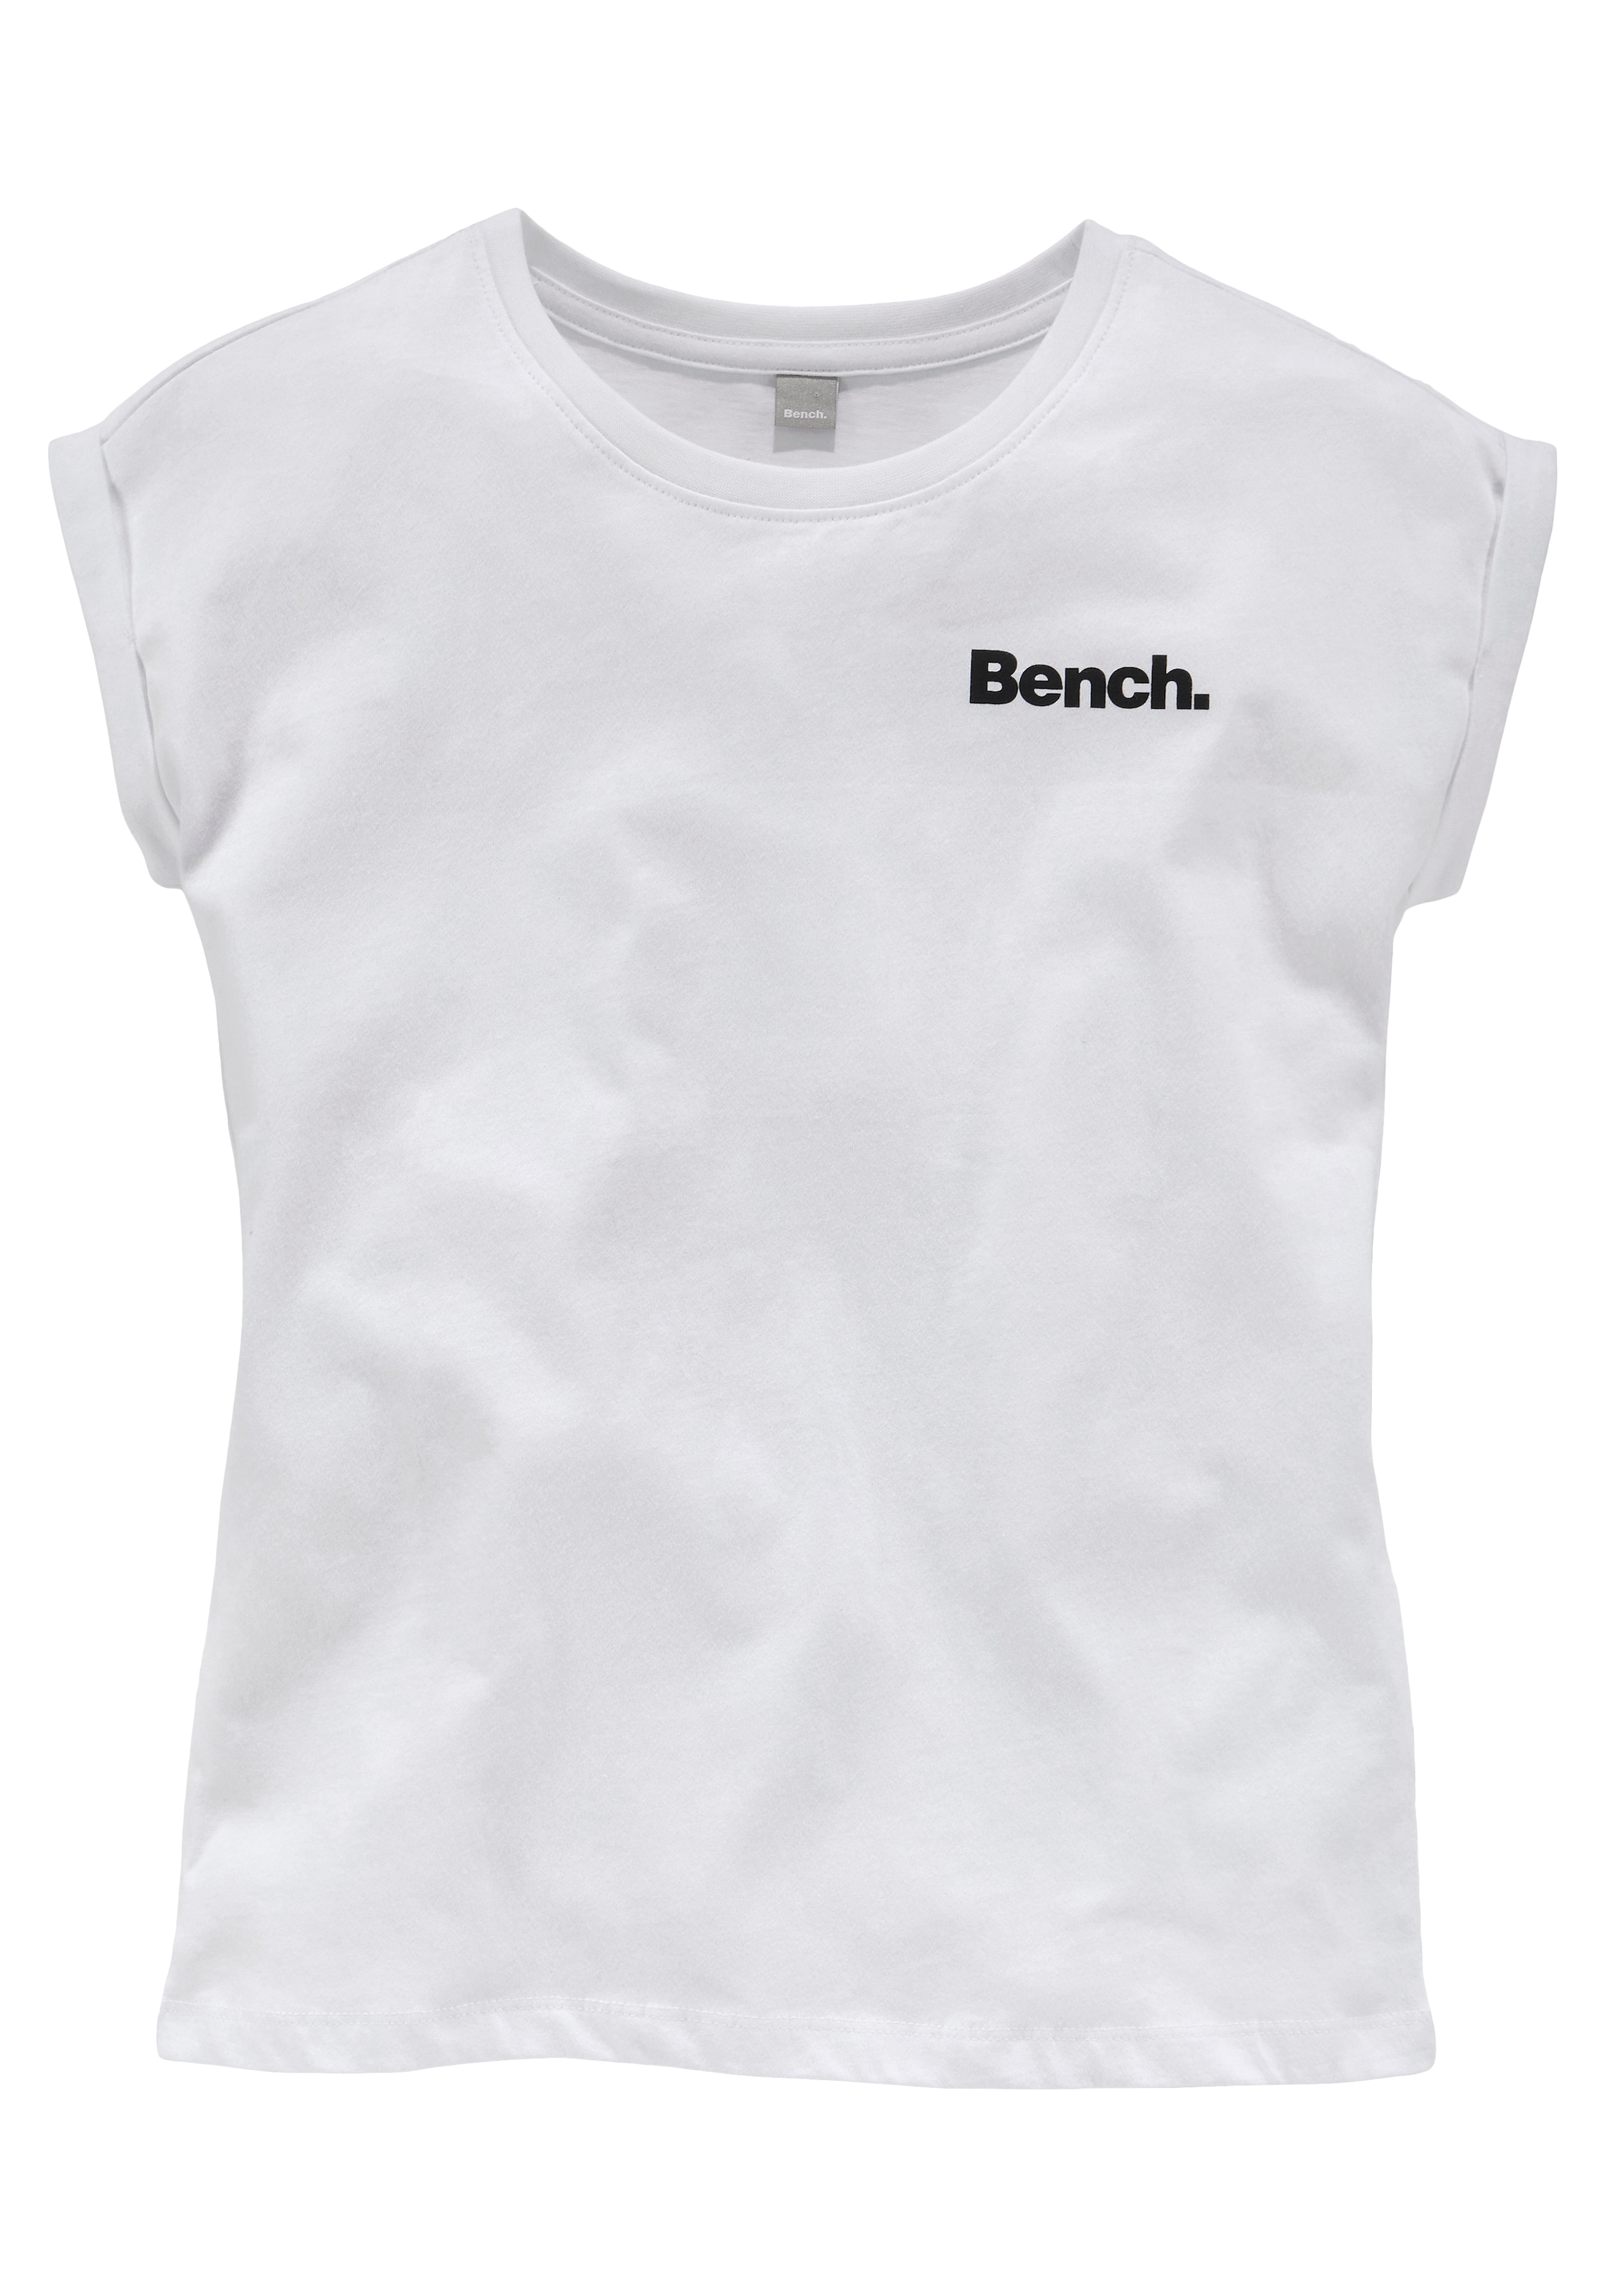 Bench. T-Shirt, mit Logo ♕ Rückendruck bei